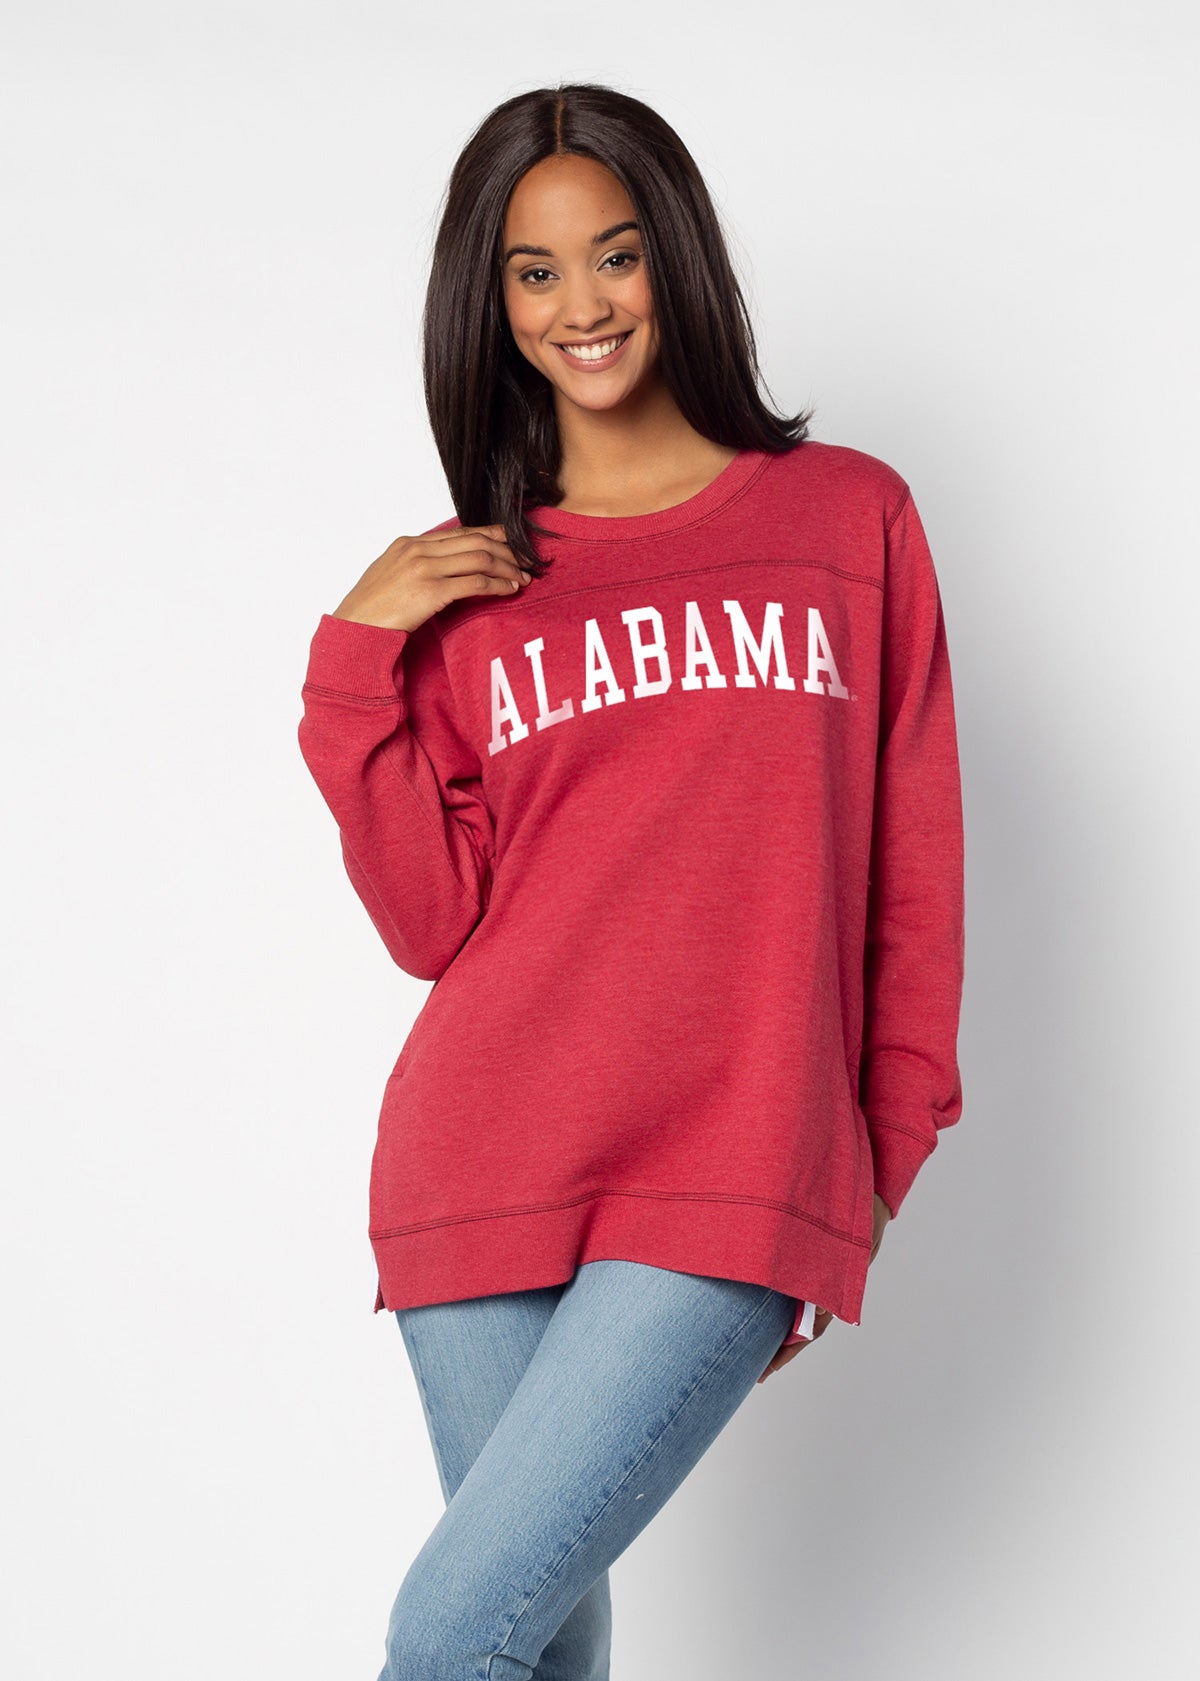 Arched A, Women's Alabama Crimson Tide Cropped T-Shirt